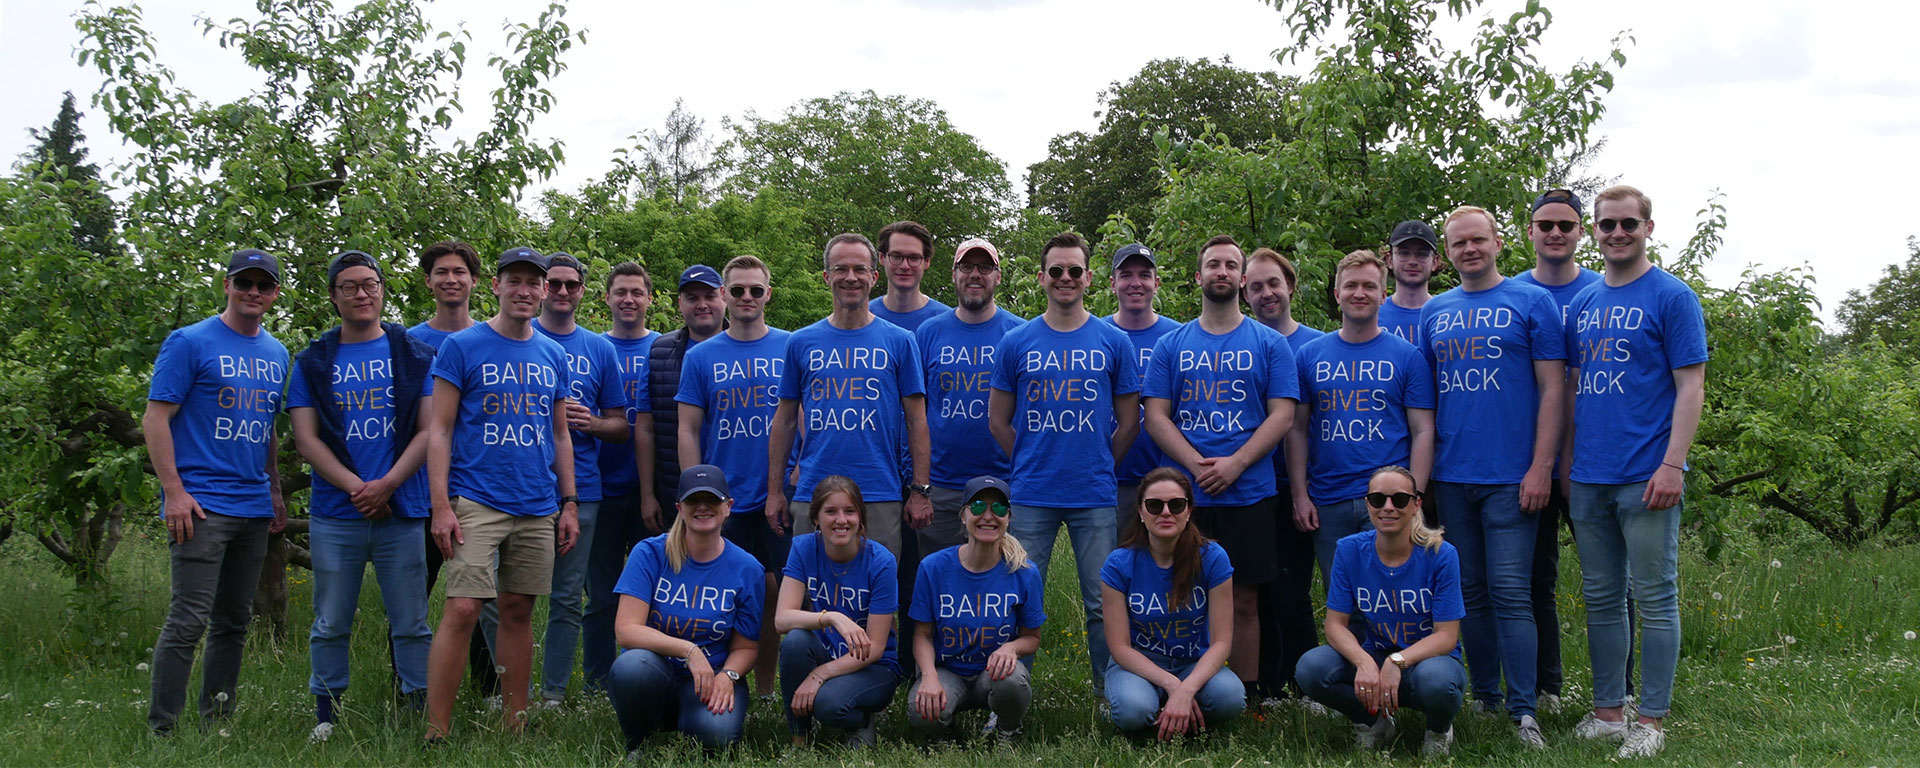 Baird associates participating in Baird Gives Back Week 2022
